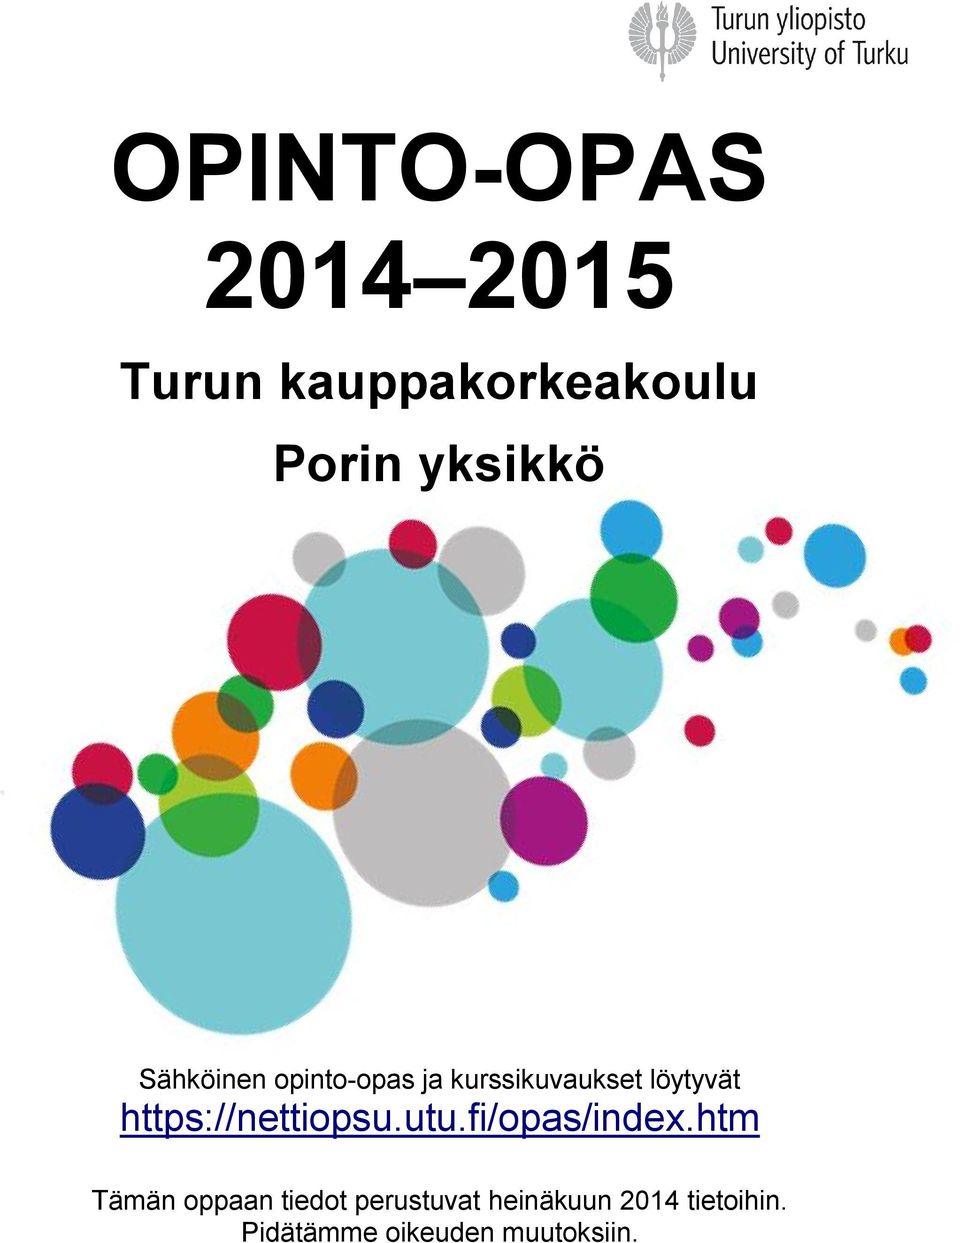 https://nettiopsu.utu.fi/opas/index.